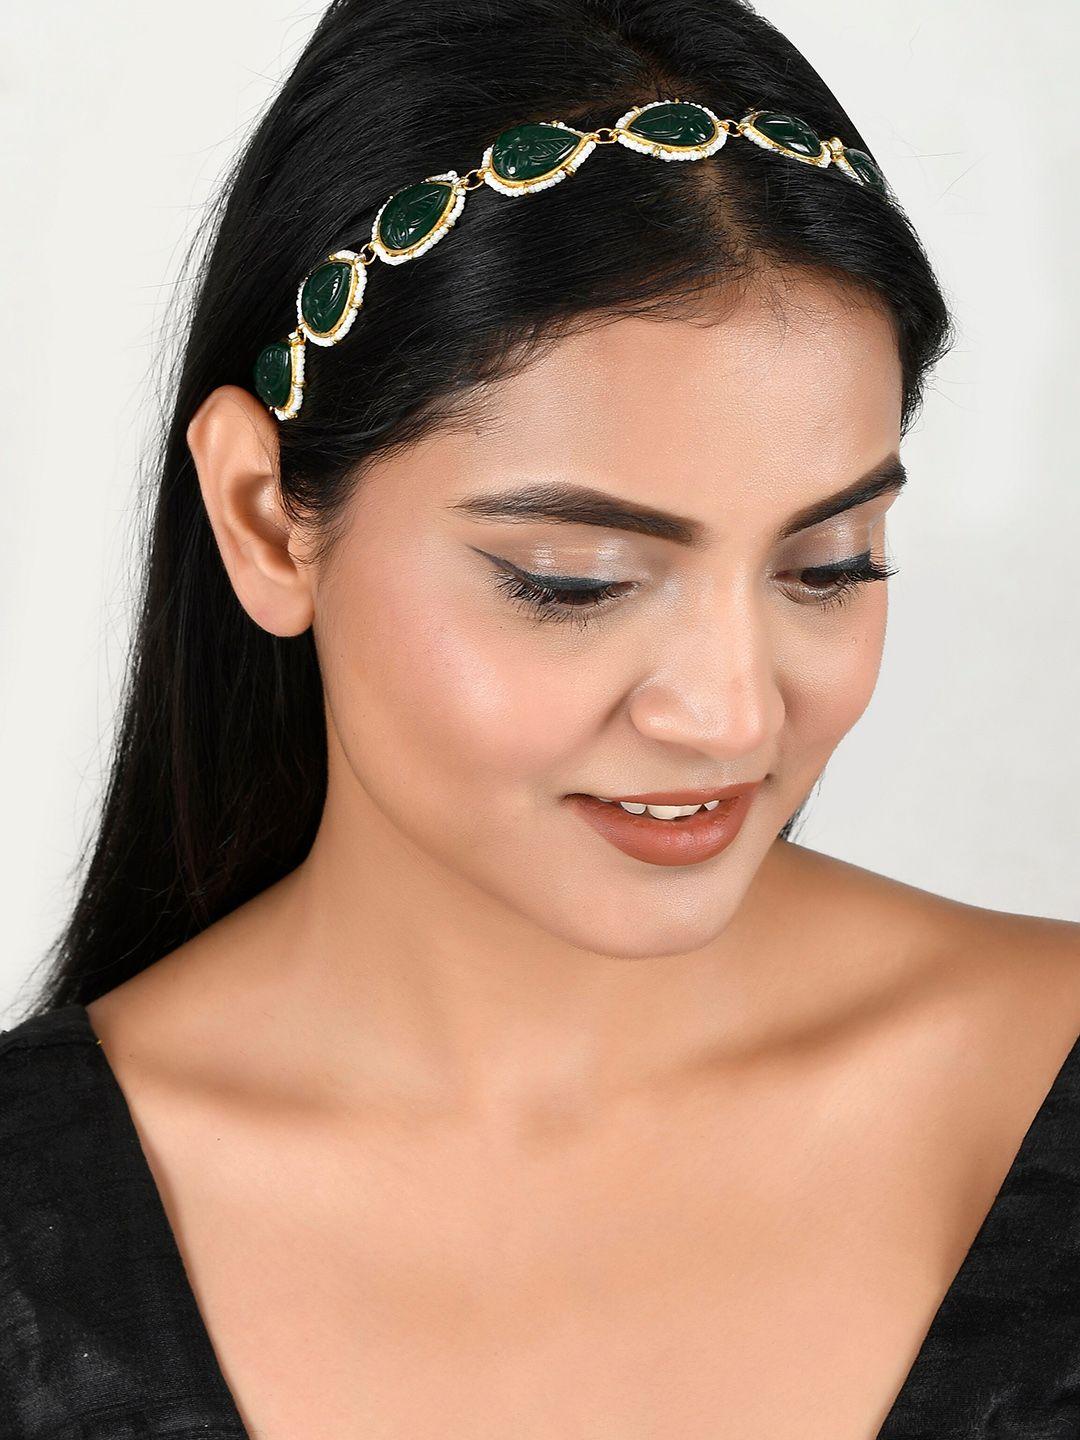 silvermerc designs gold-plated & bead studded head jewellery